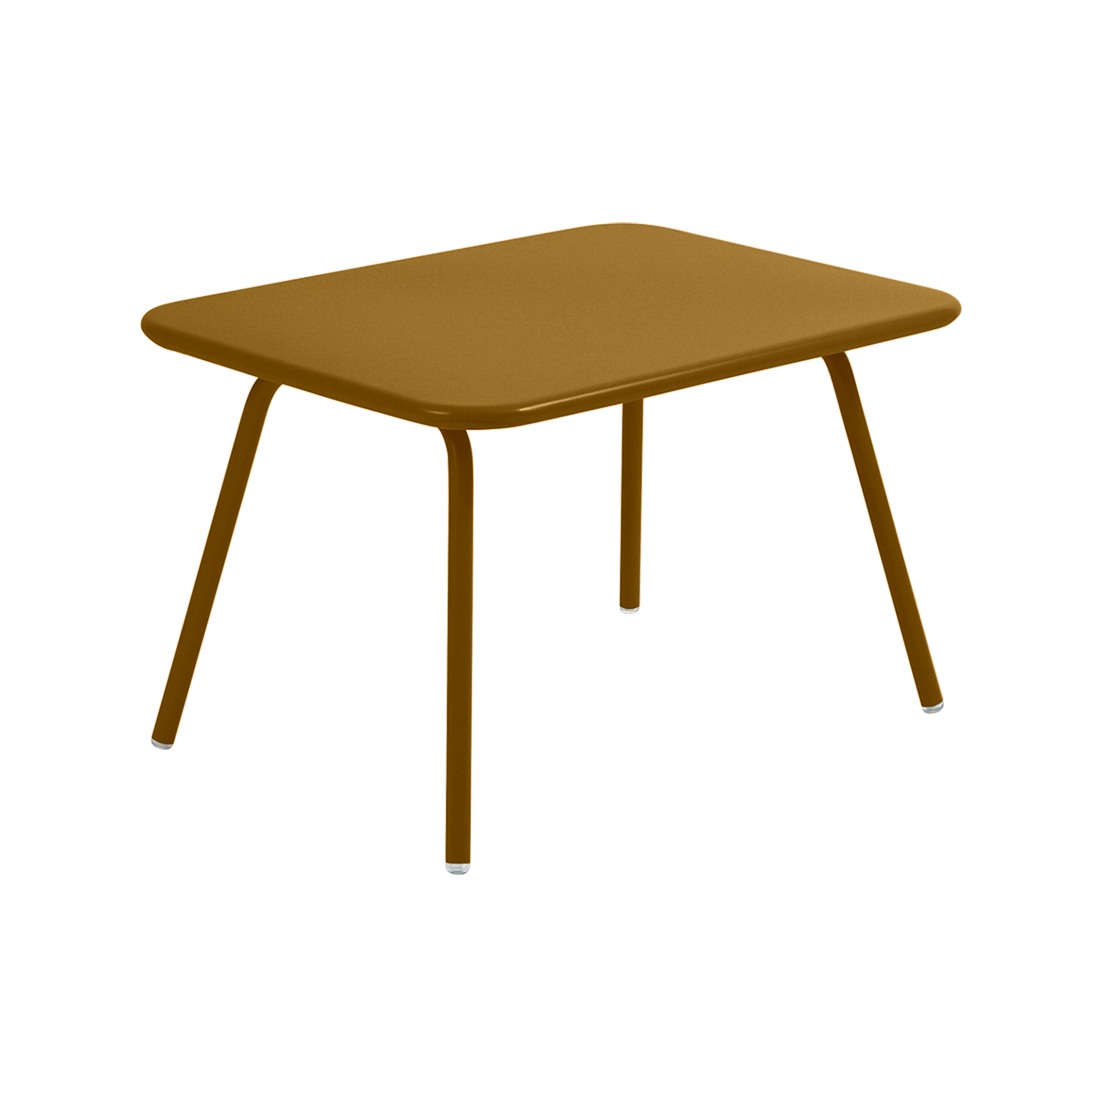 Luxembourg Kid Rectangular Table